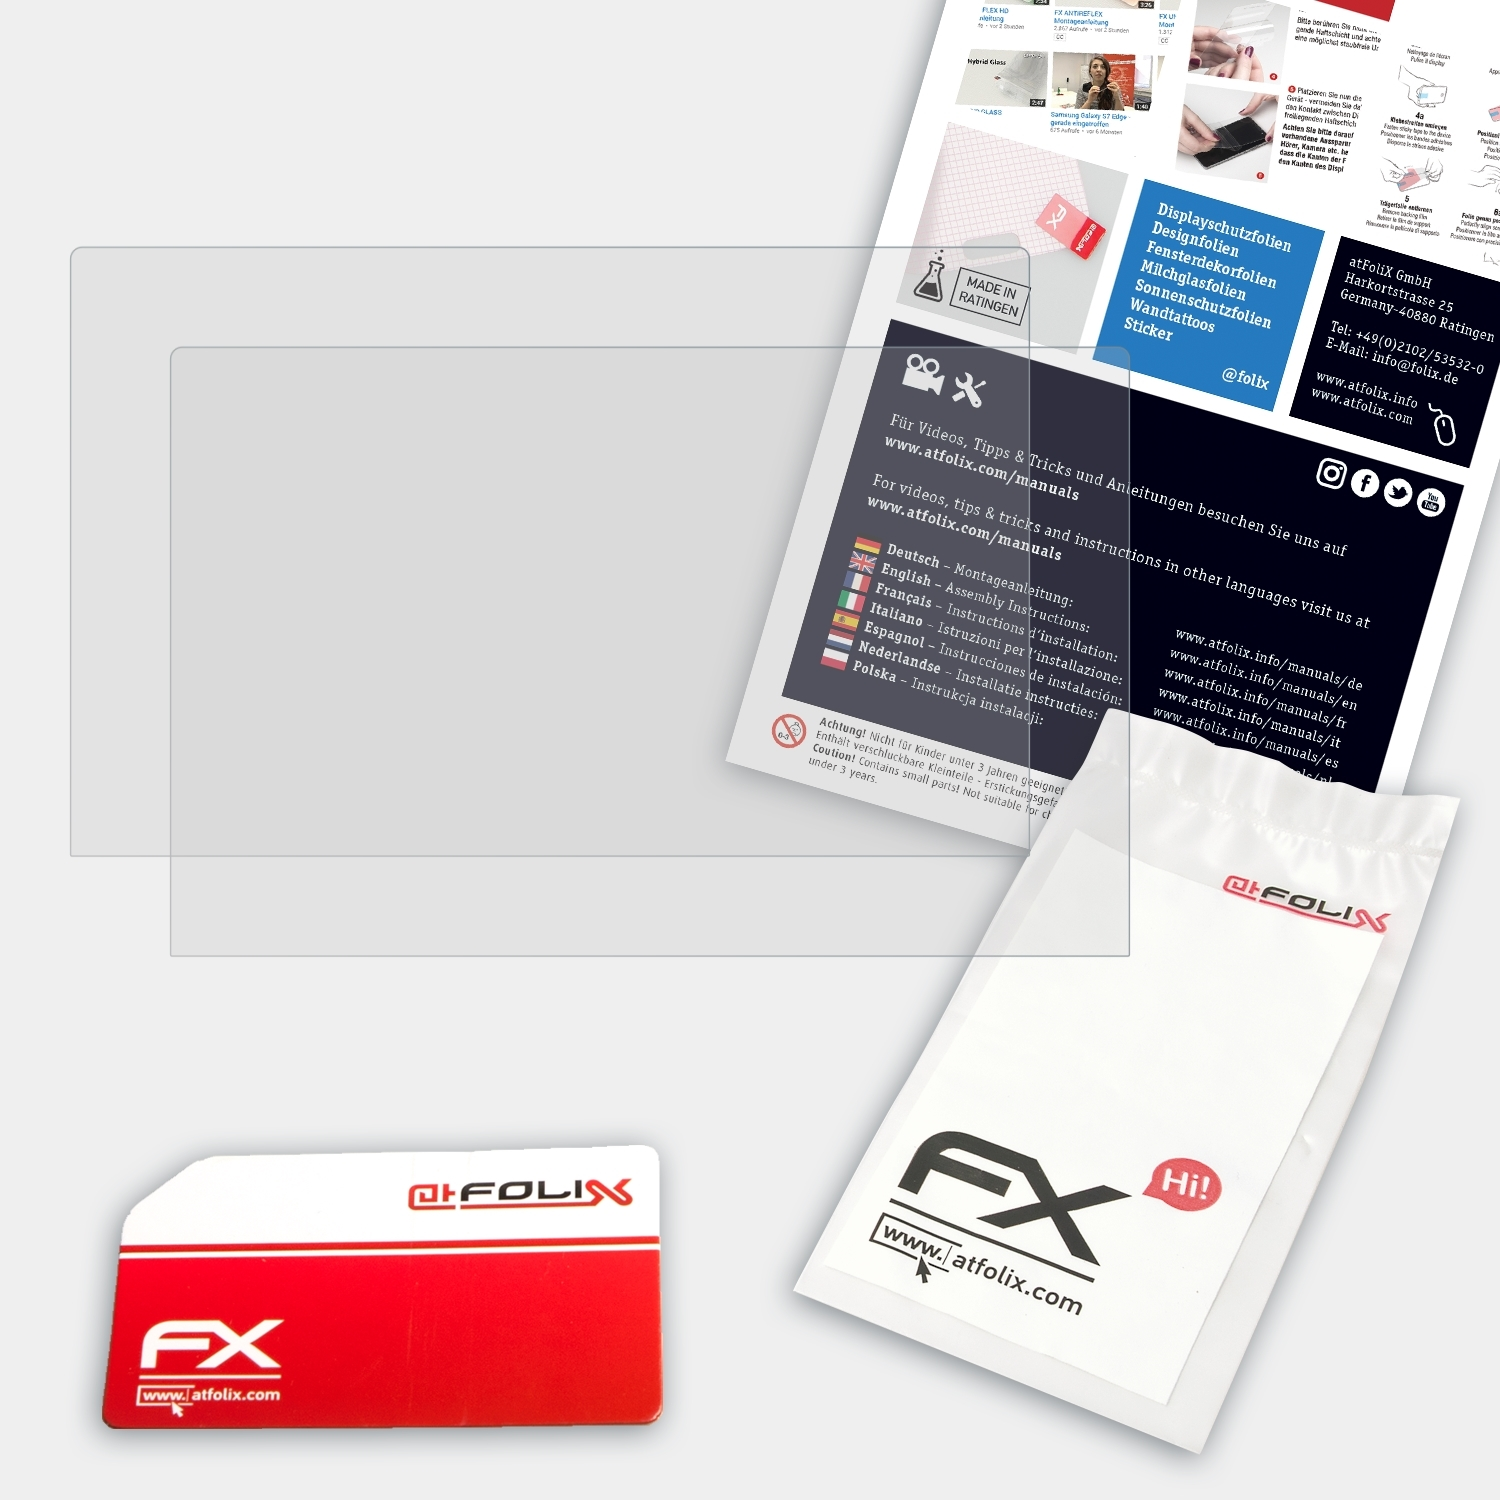 (TP412UA)) 2x FX-Antireflex Flip ATFOLIX Displayschutz(für VivoBook 14 Asus